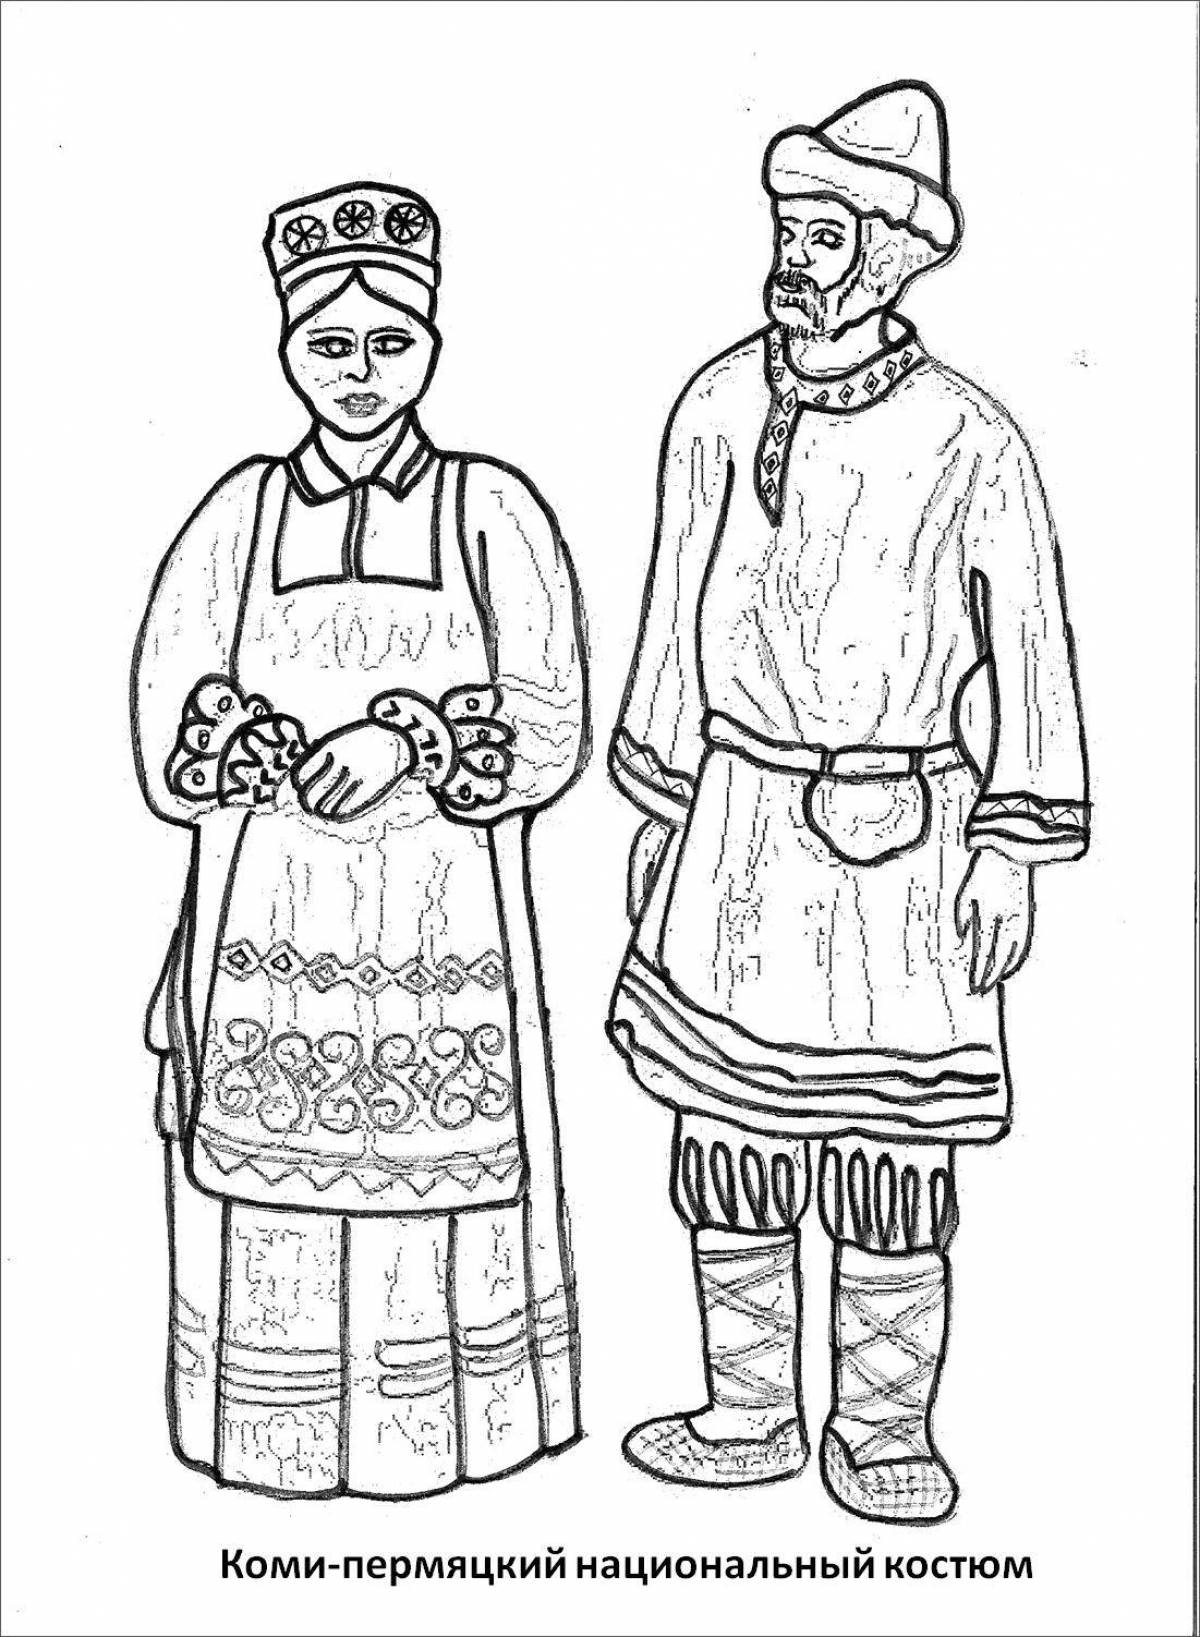 Charming Kuban national costume coloring book